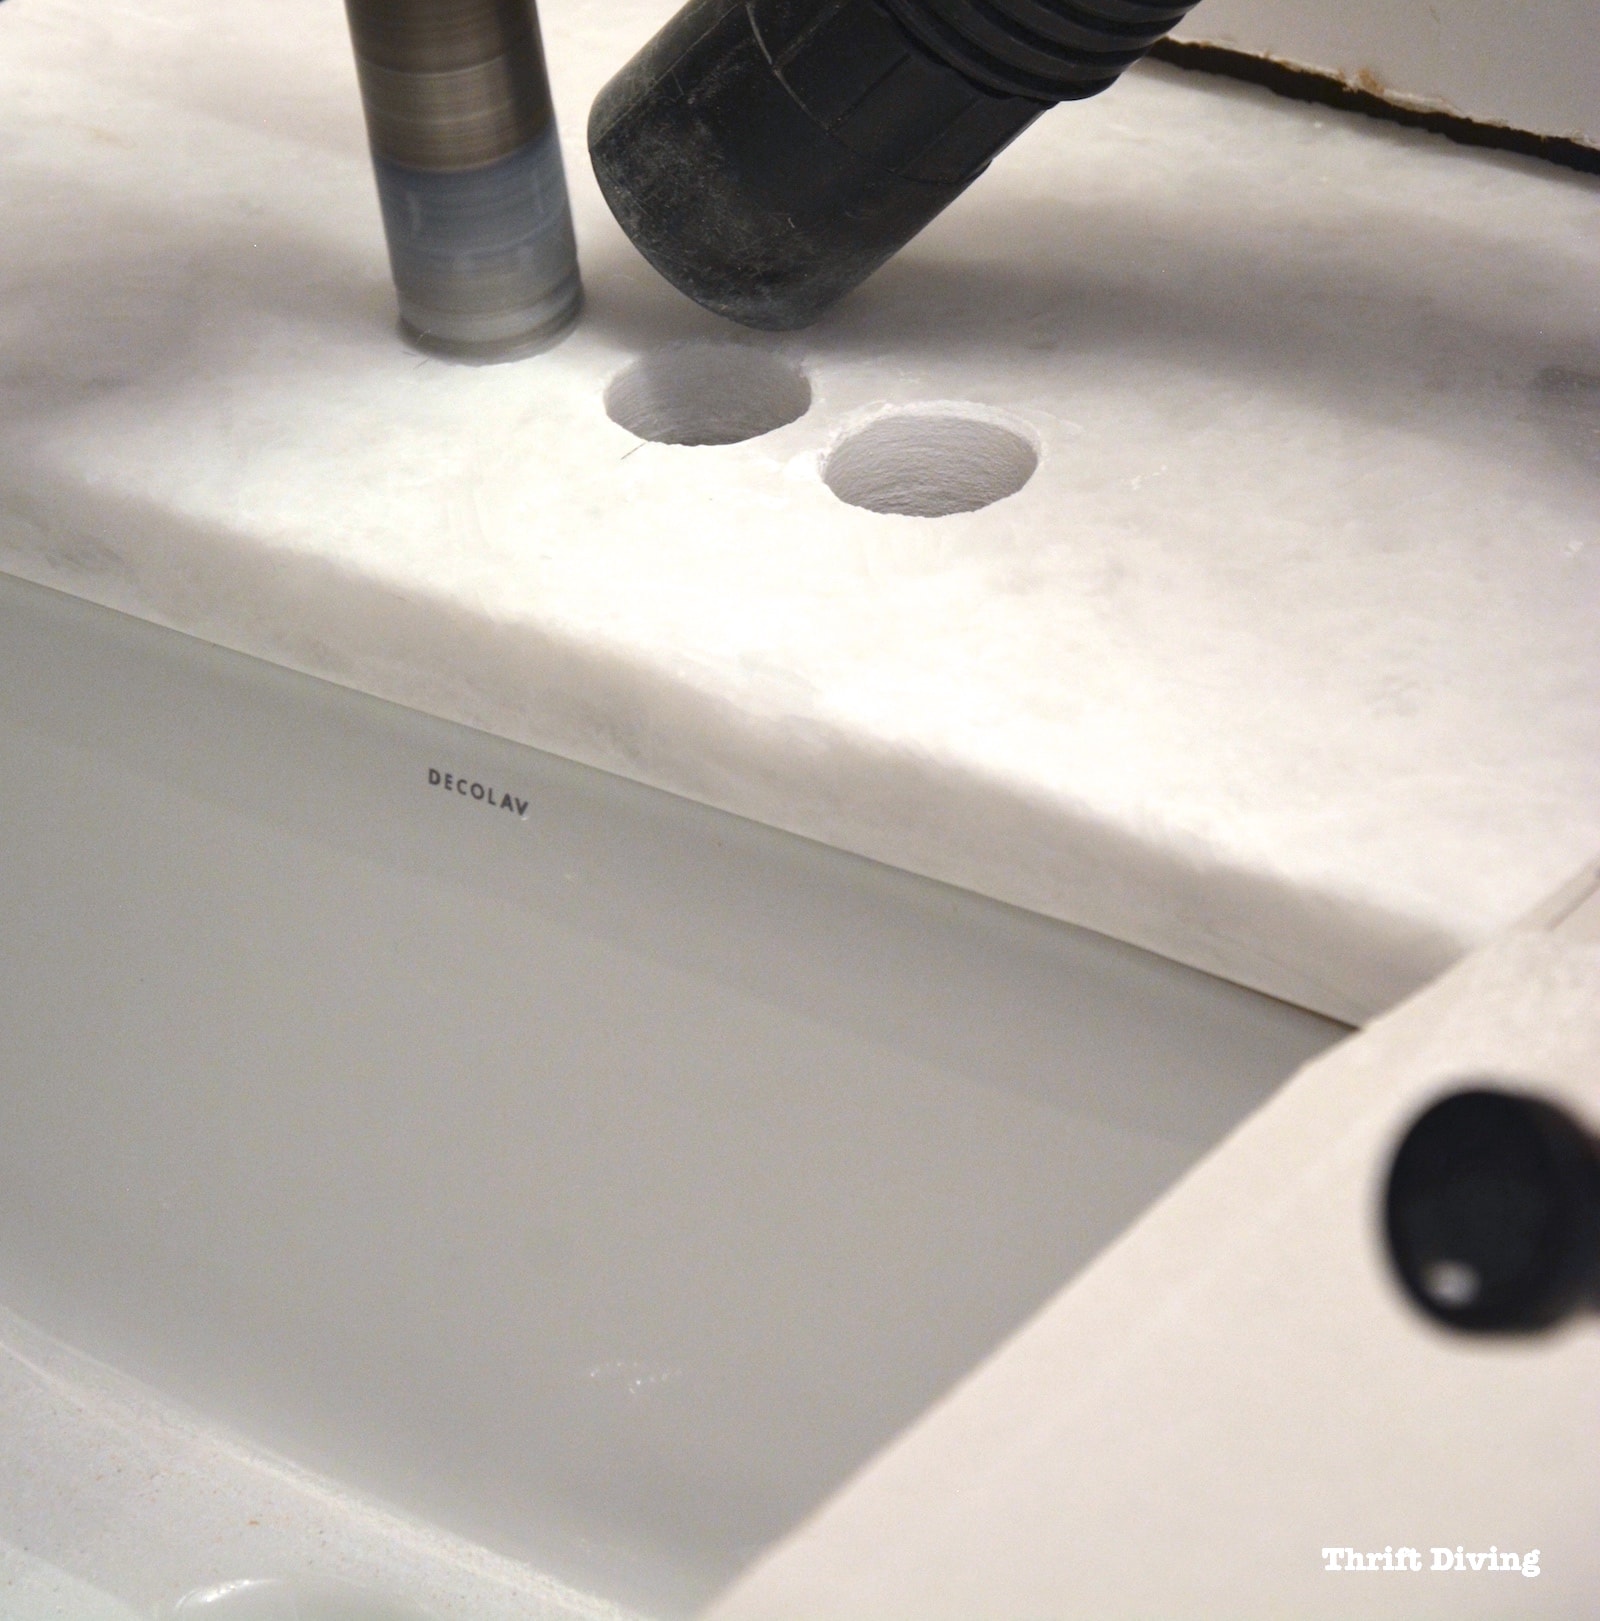 Build-a-DIY-bathroom-vanity-adding-granite-countertop-Thrift-Diving-8378